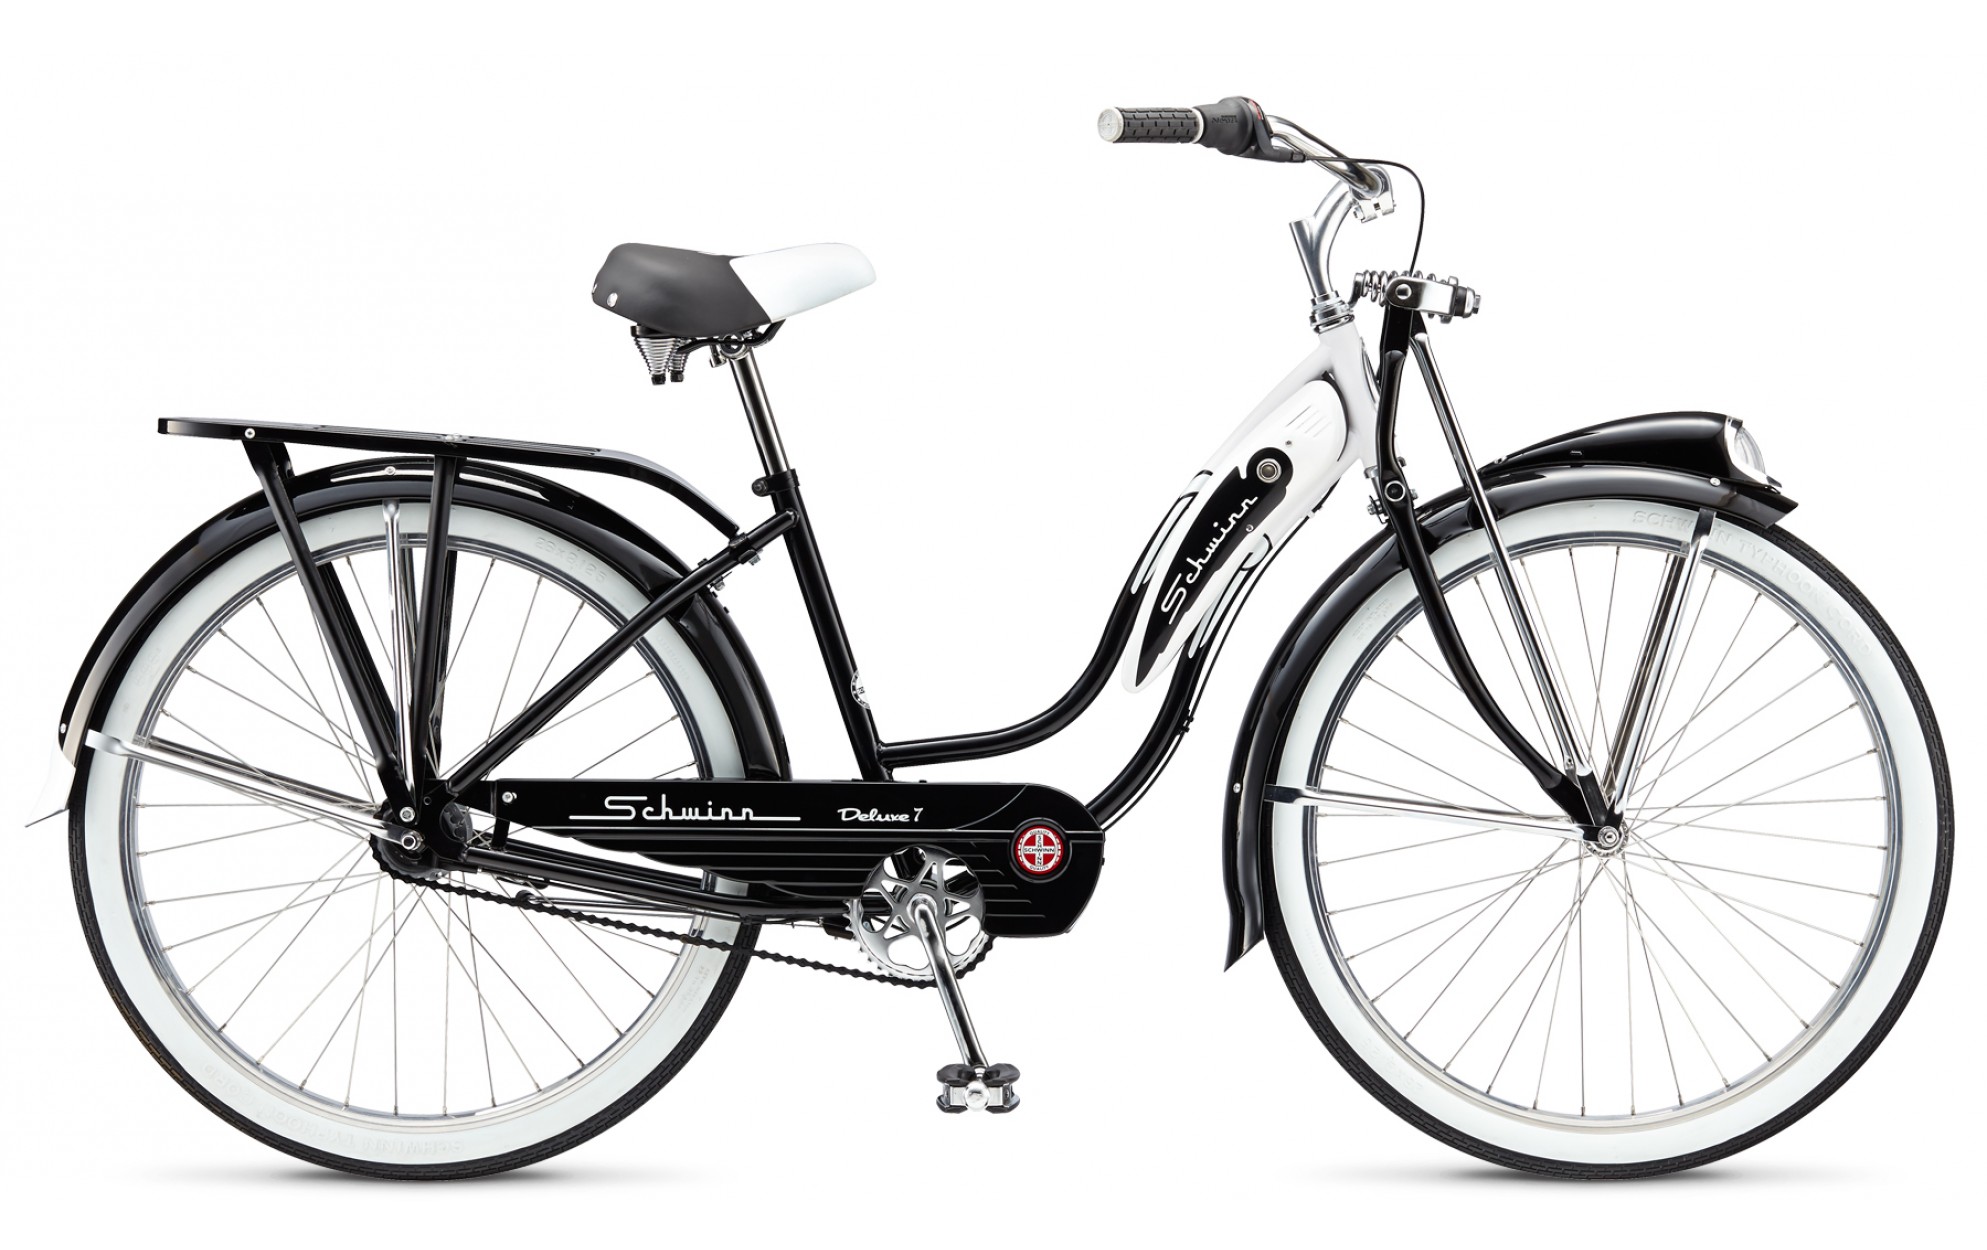 Велосипед 26 "Schwinn Classic Deluxe 7 thru step frame black 2015 фото 